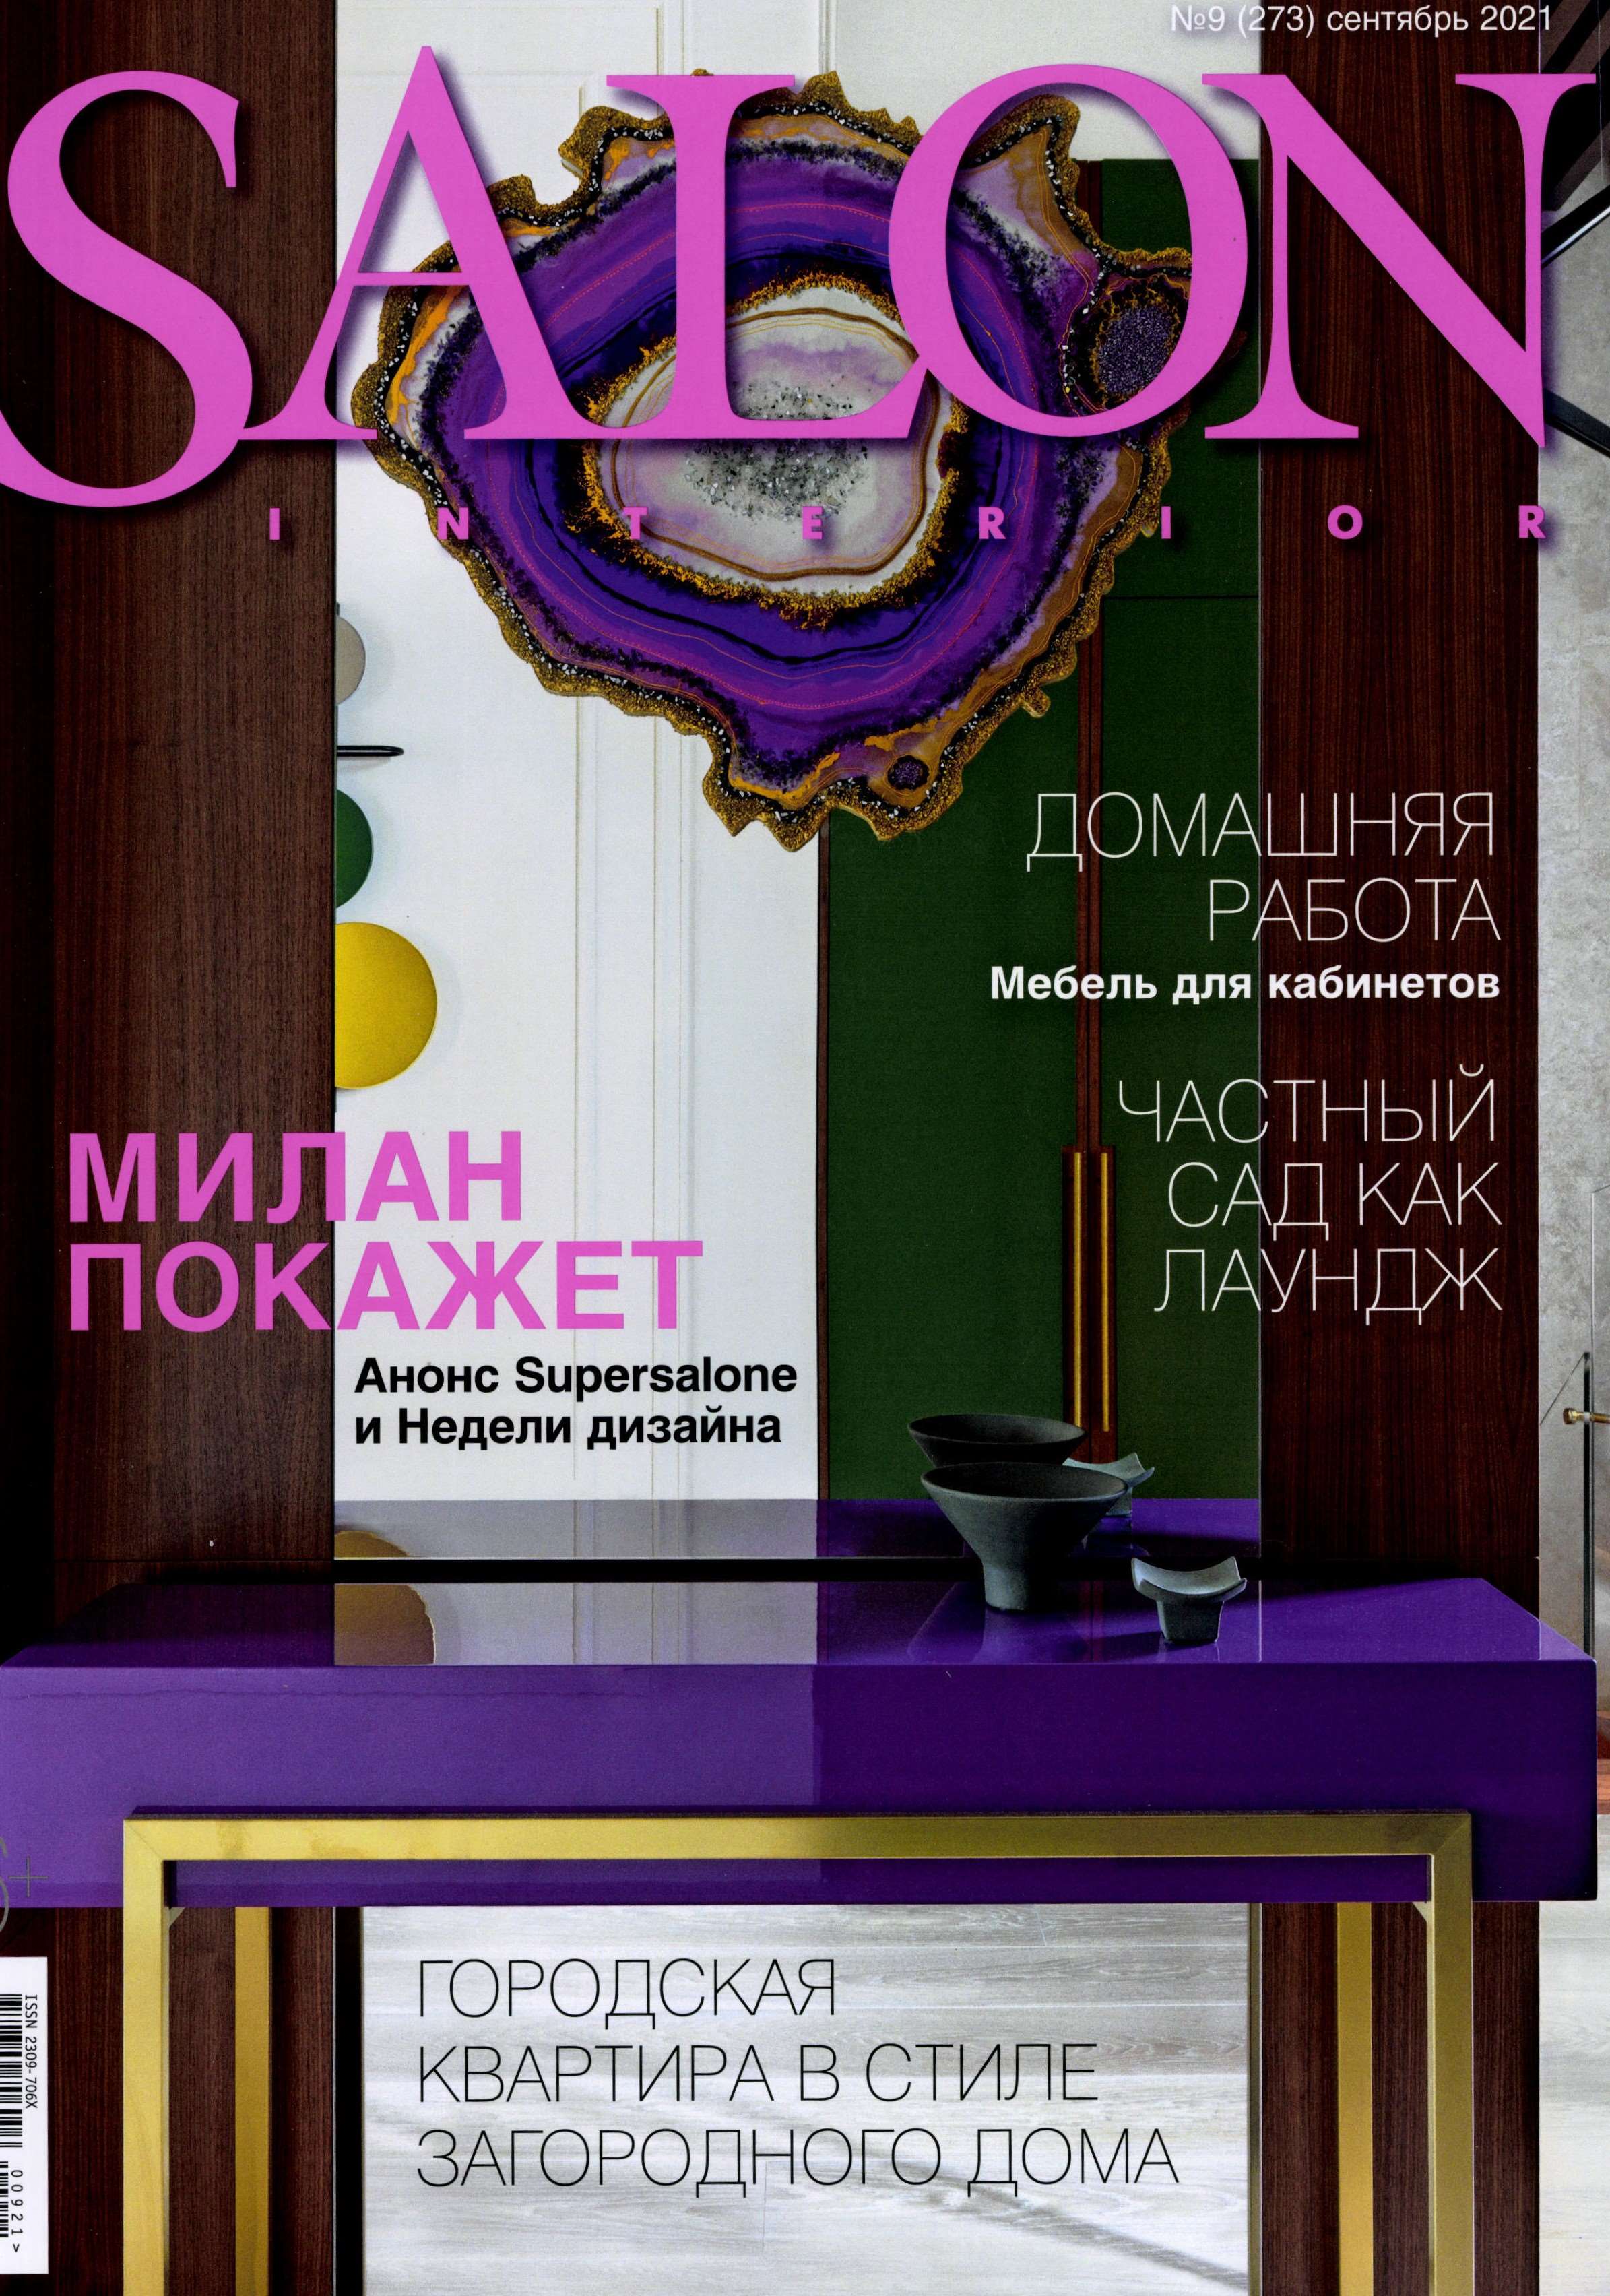 Salon Russia September 2021